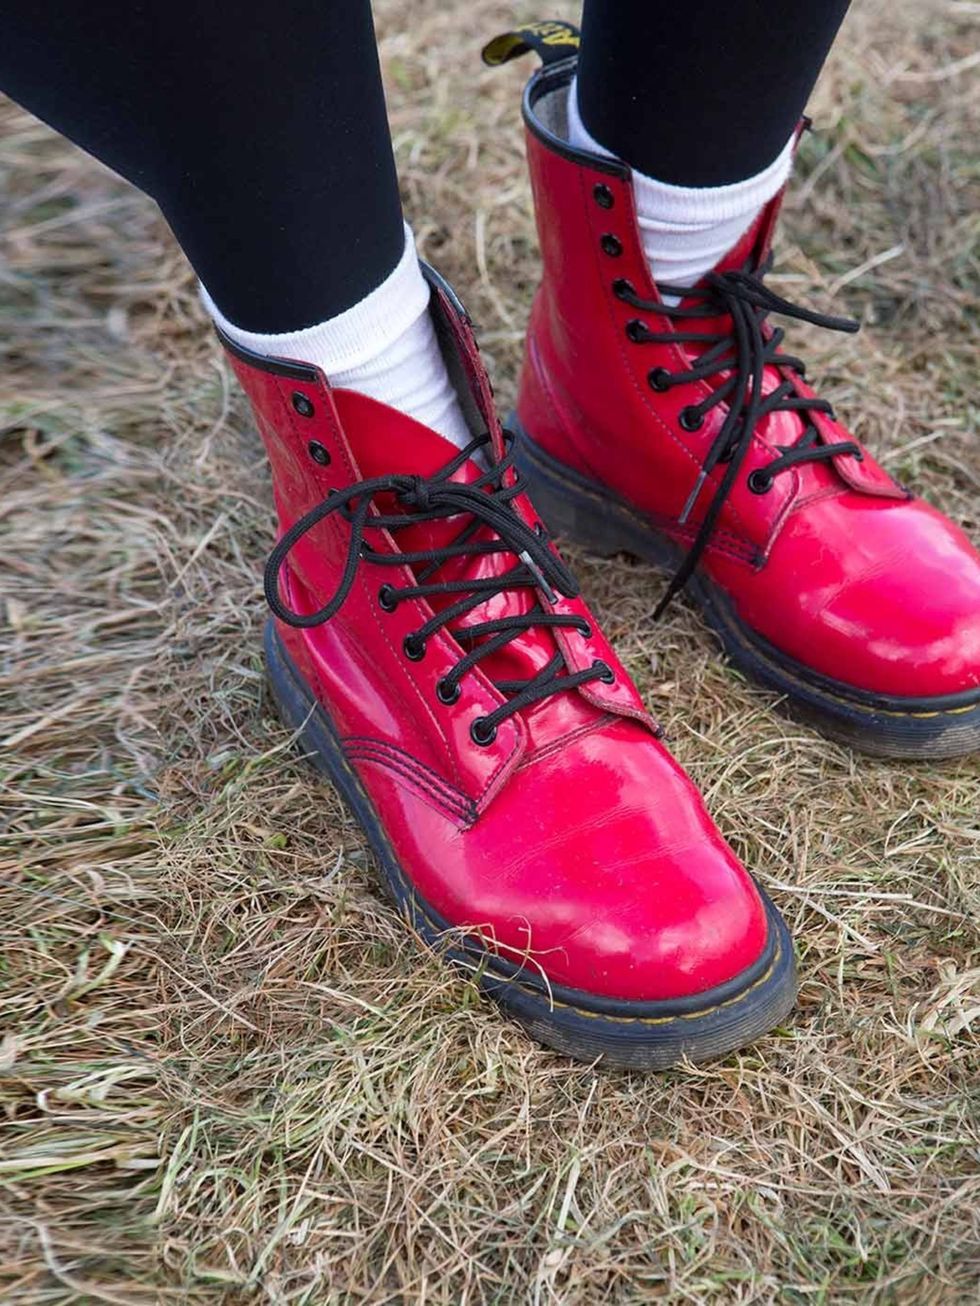 <p>Lacy Safo wears Doctor Martin boots.</p><p><a href="http://www.elleuk.com/style/street-style/secret-garden-party-street-style-2013">Secret Garden Party Street Style</a></p><p><a href="http://www.elleuk.com/style/street-style/wilderness-festival-street-